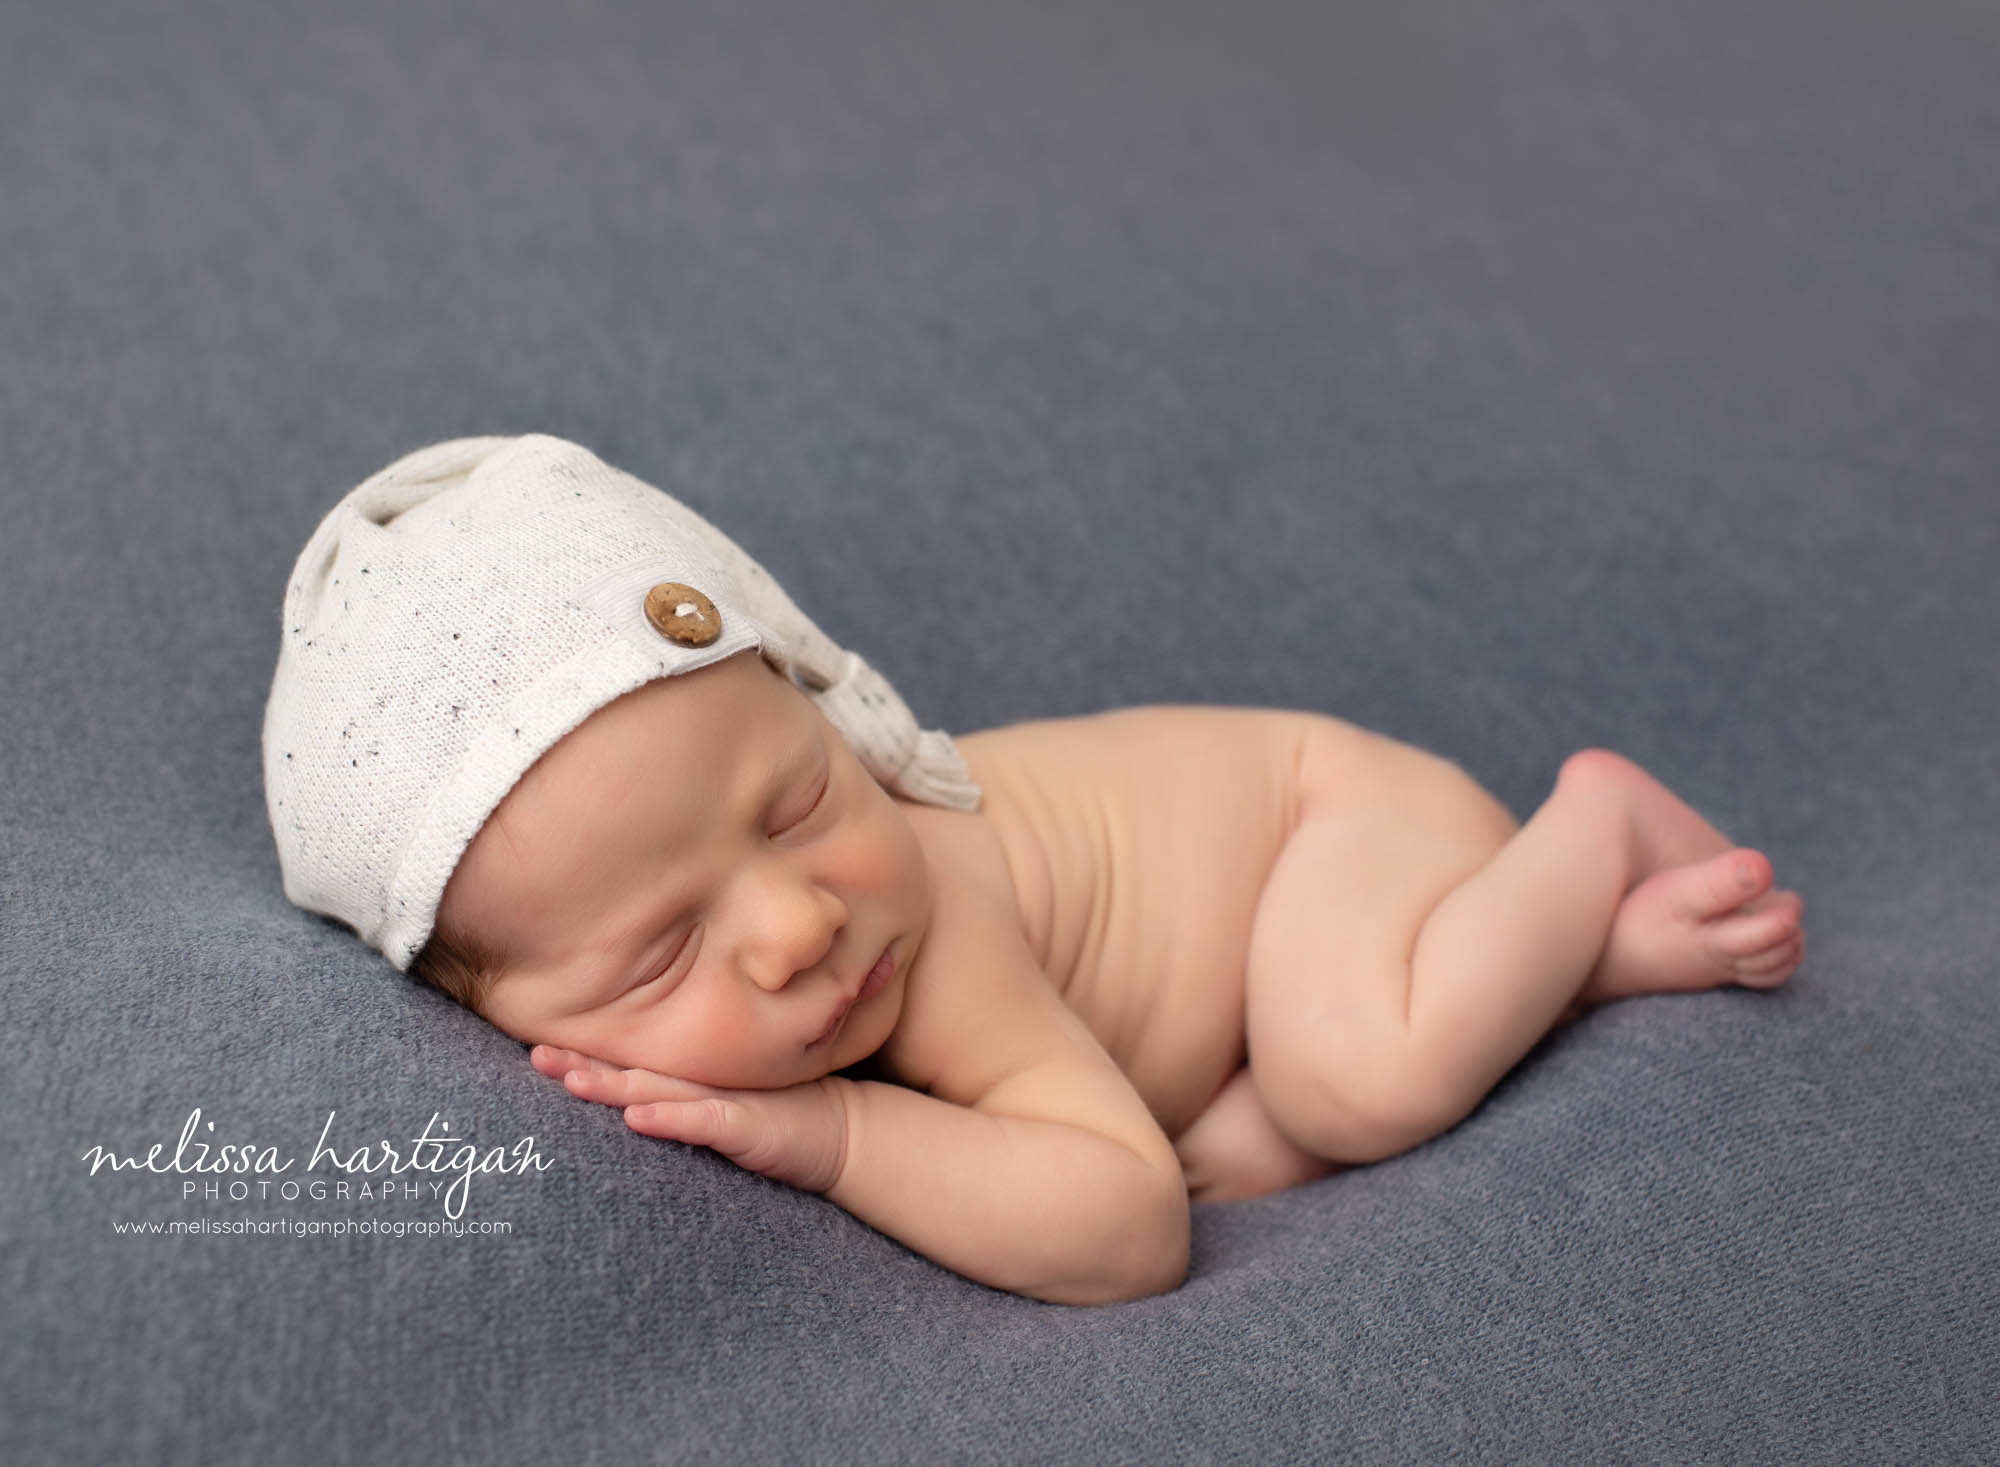 newborn baby boy posed on side wearing cream sleepy cap